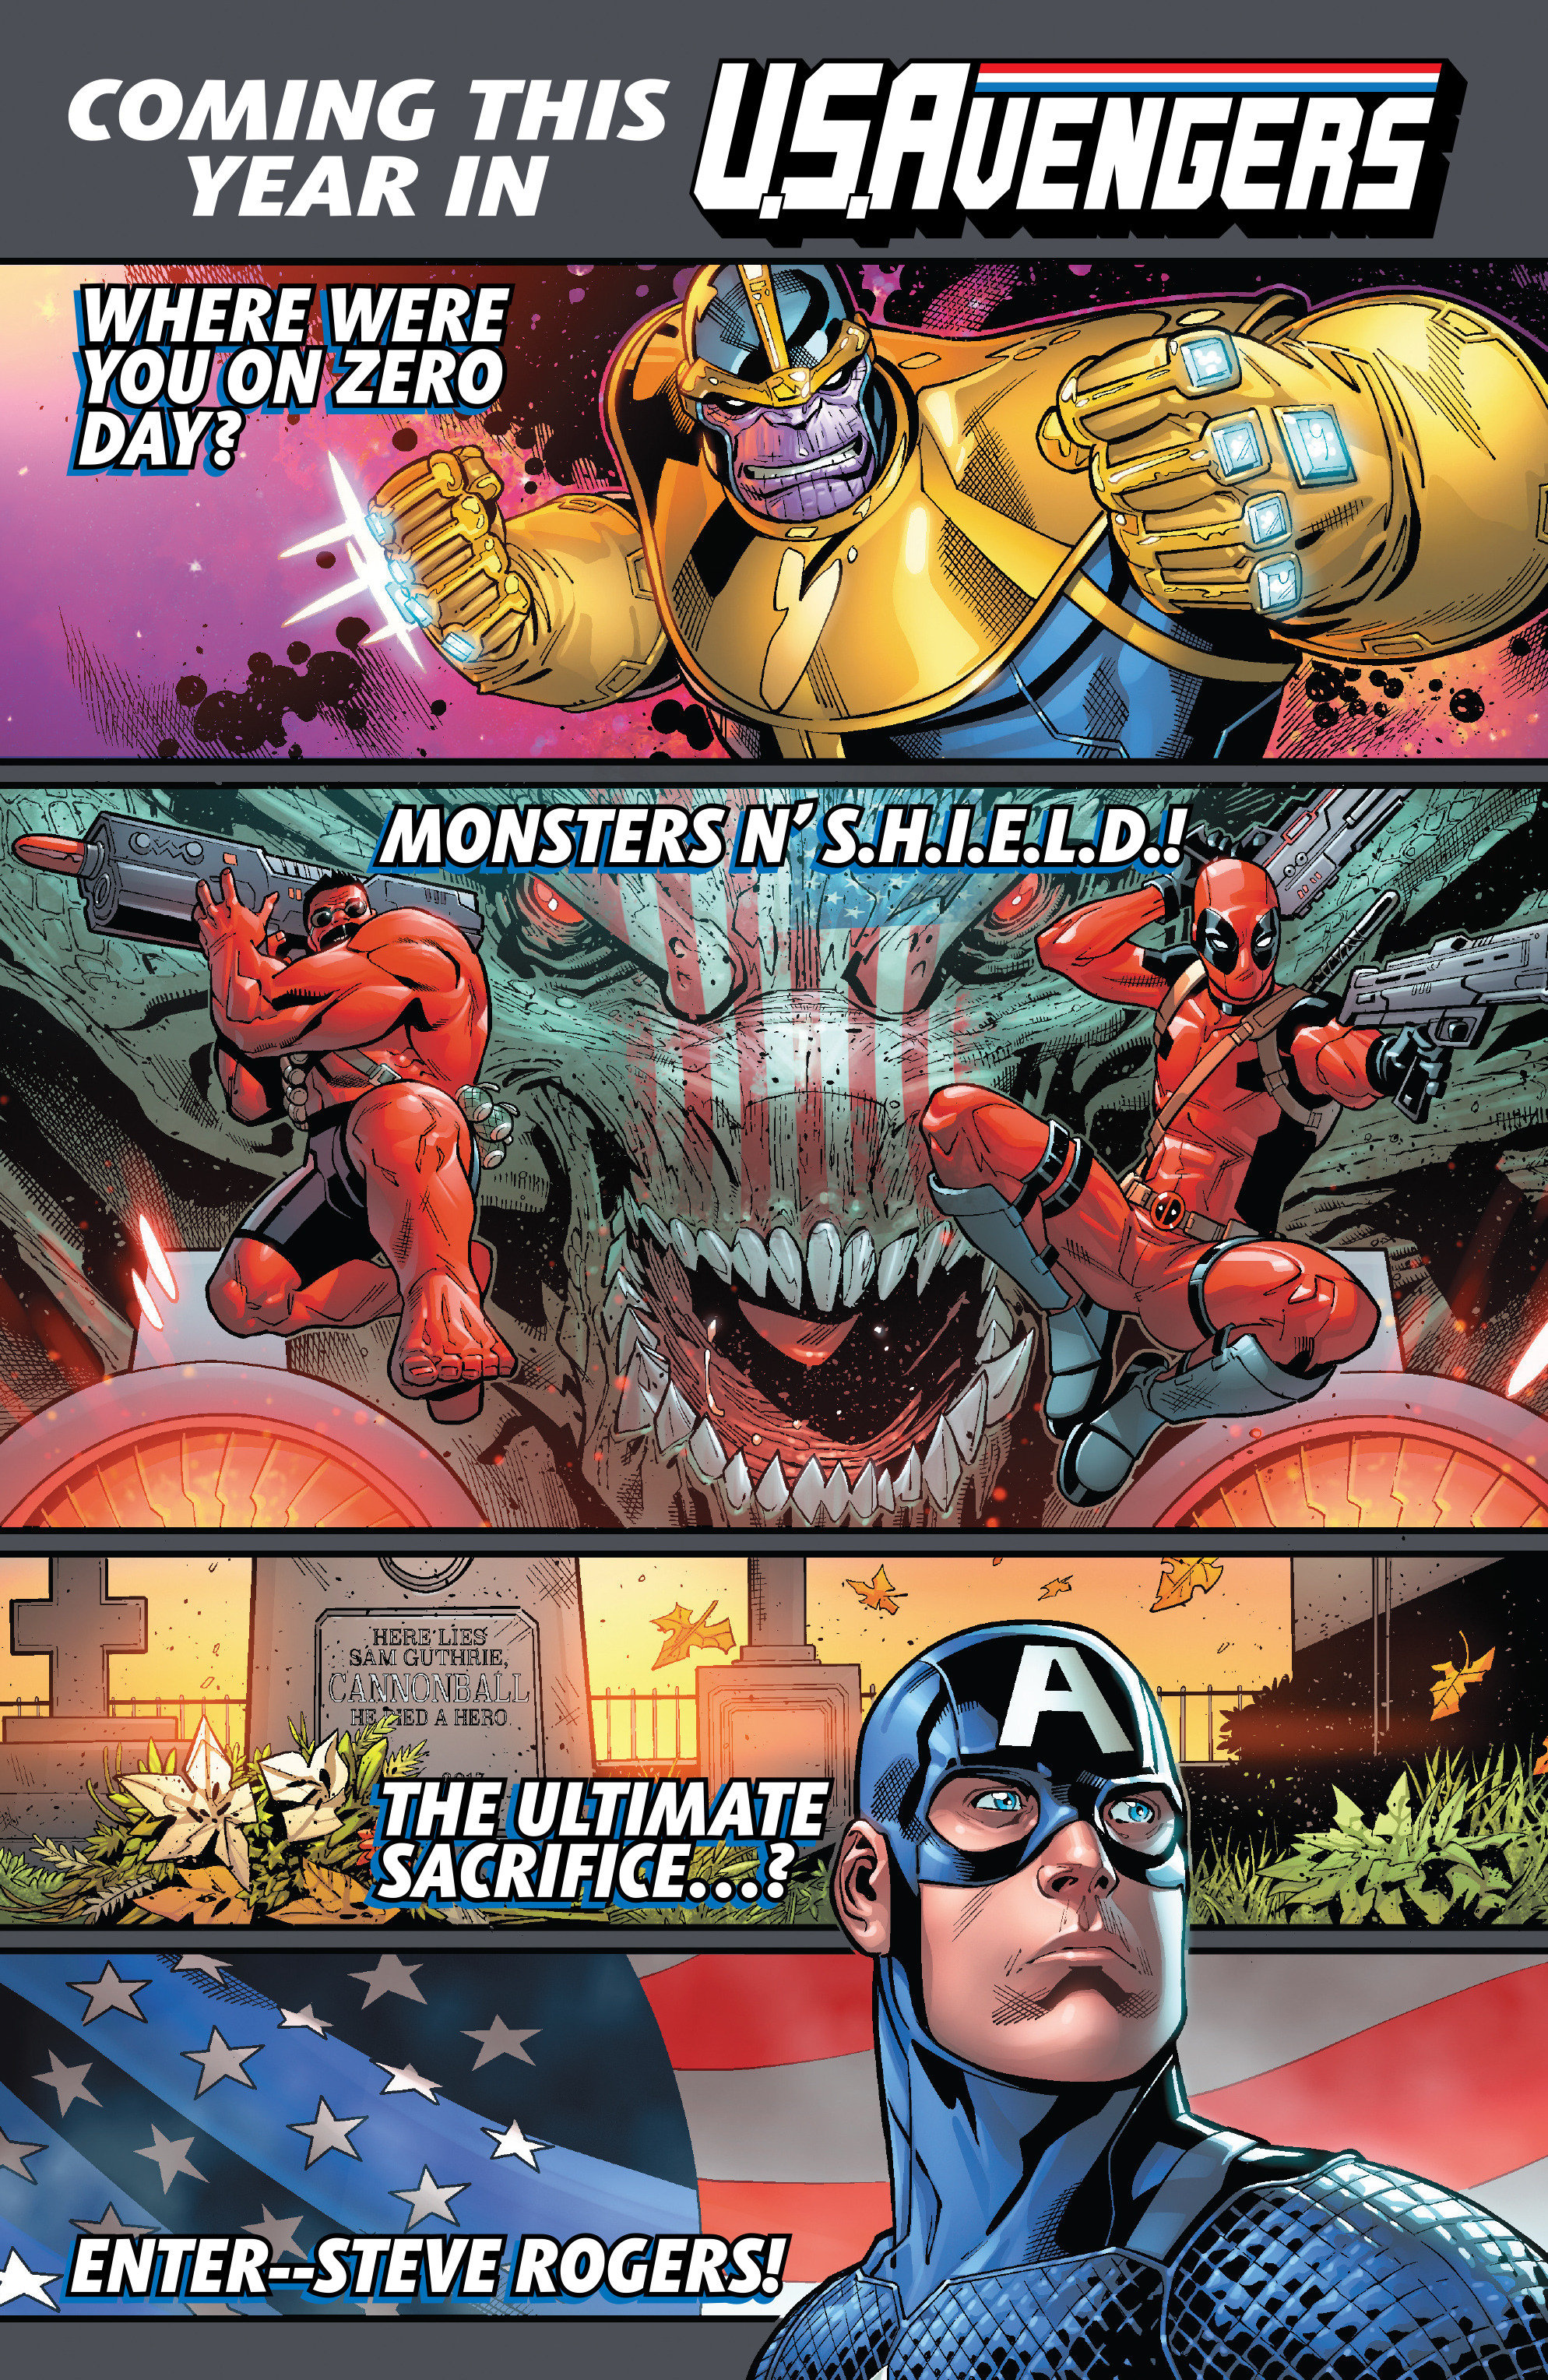 Read online U.S.Avengers comic -  Issue #1 - 21